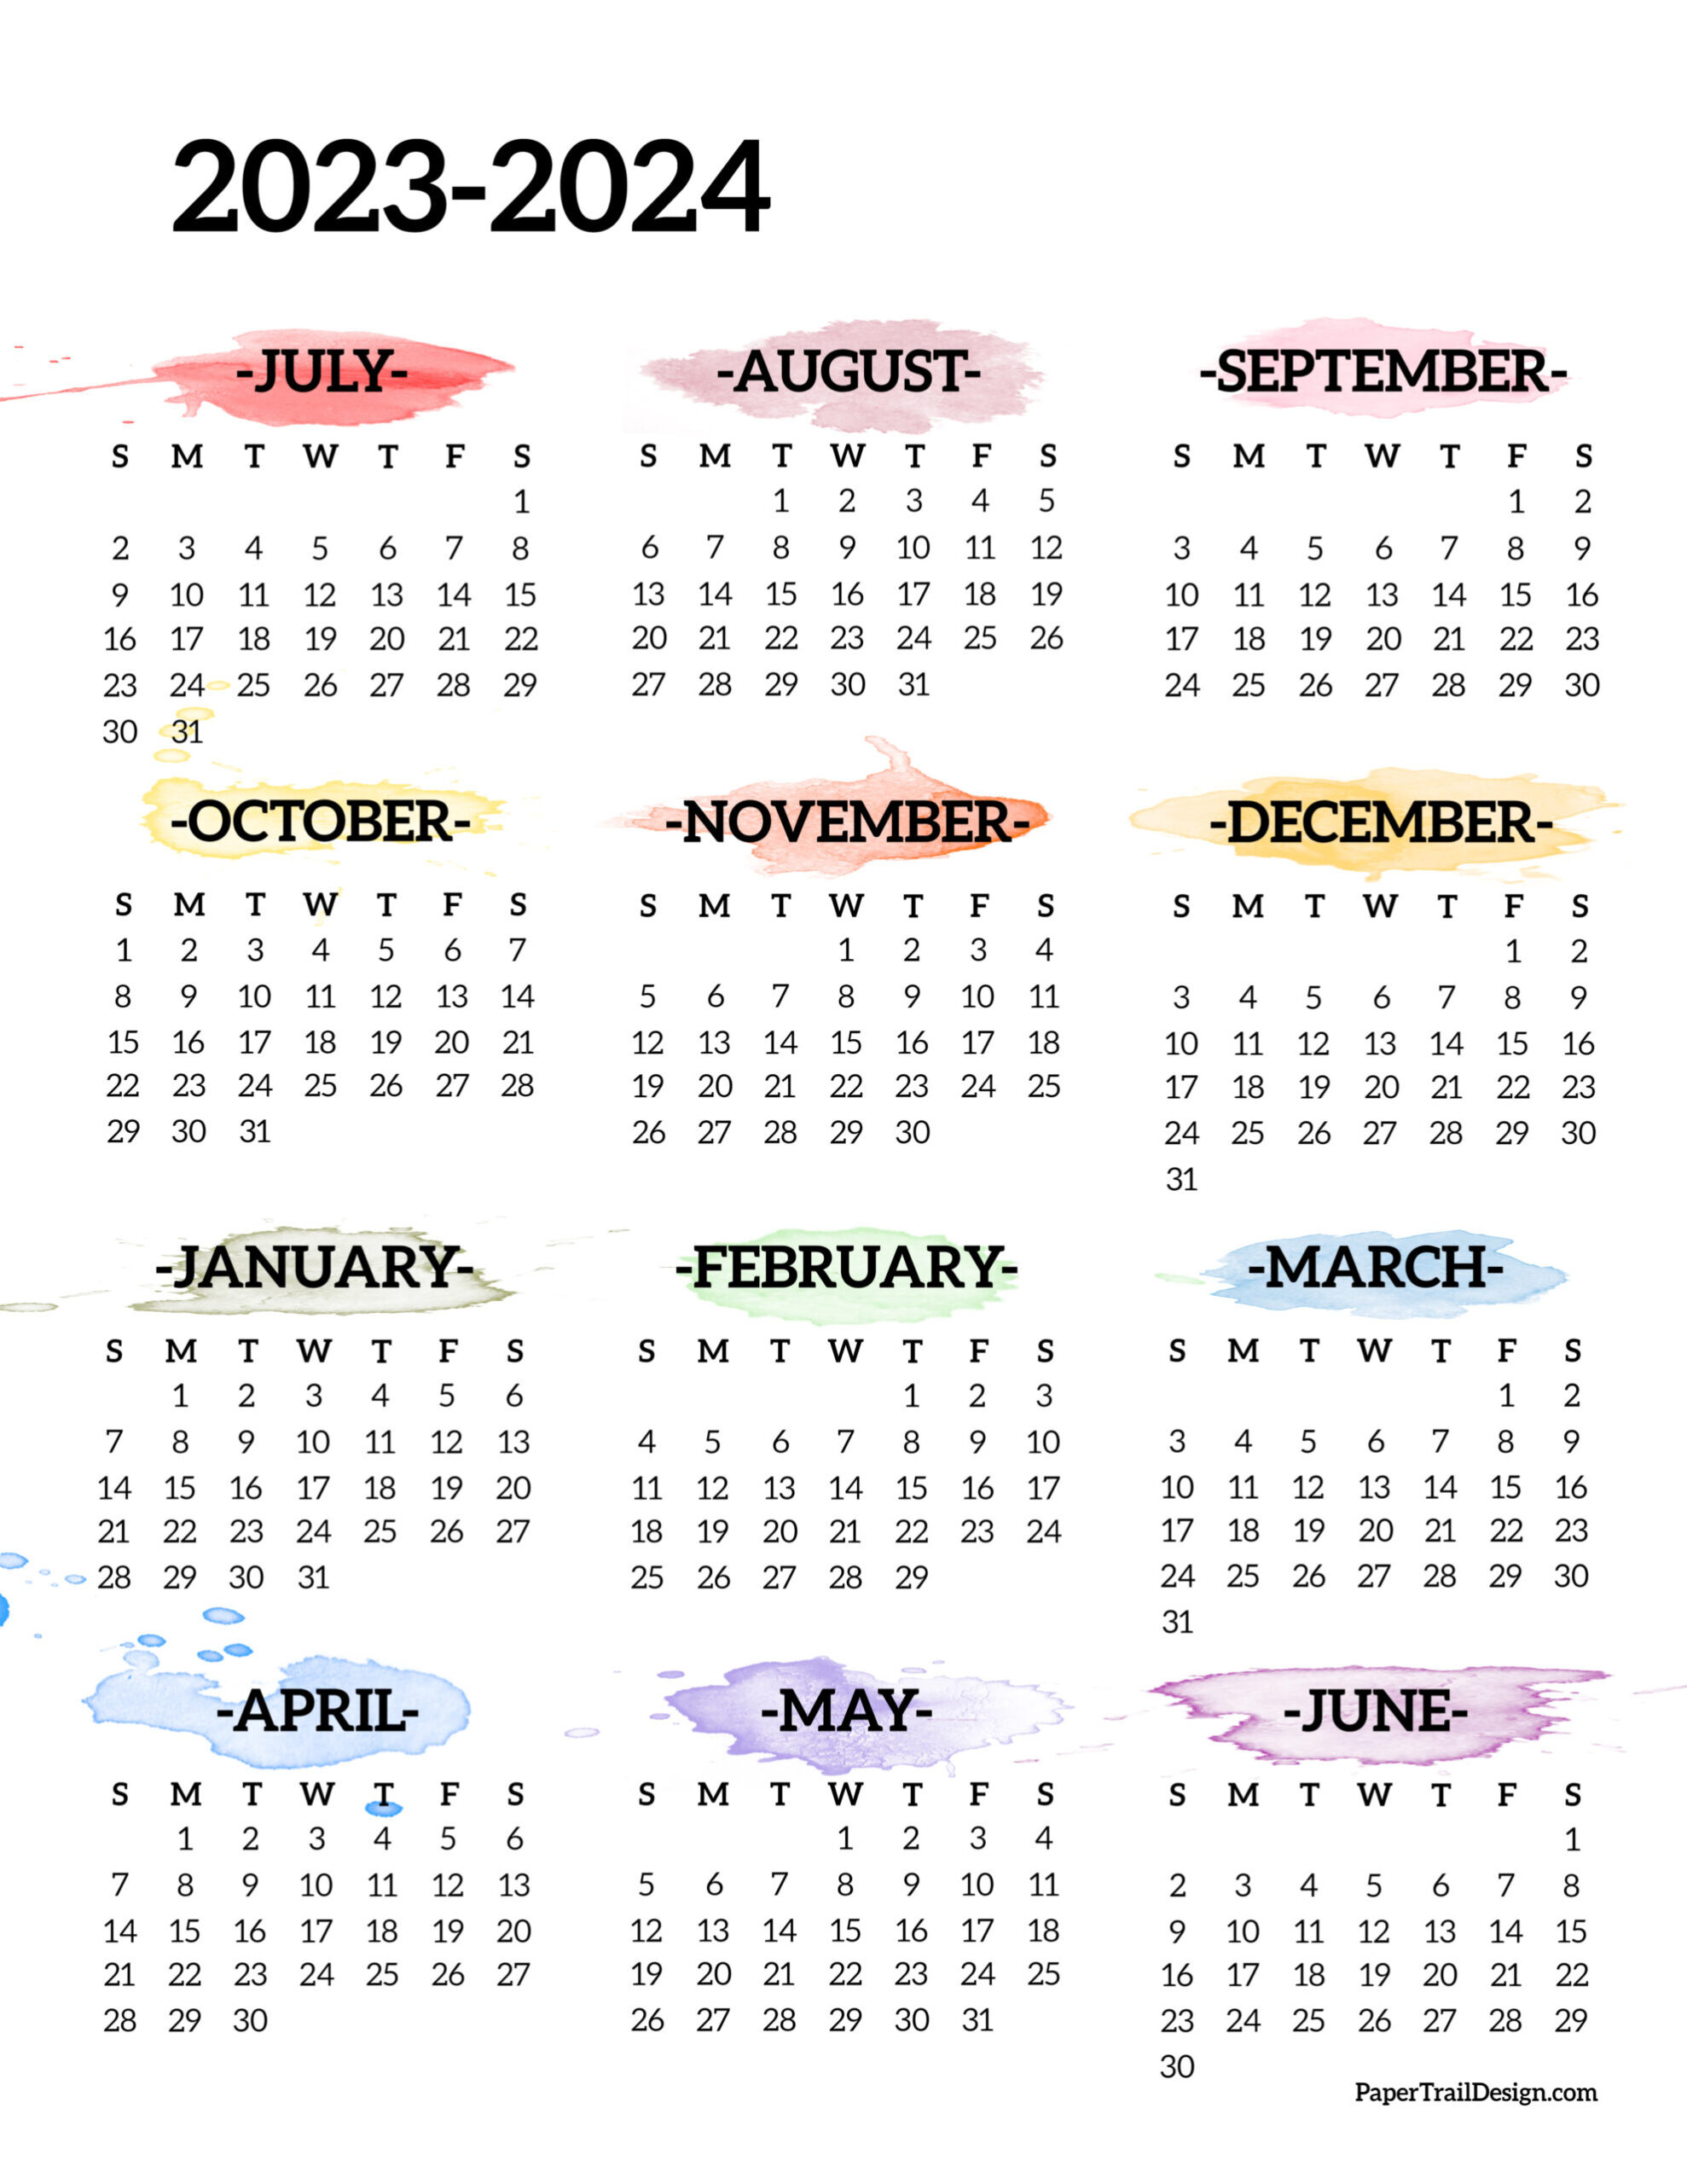 2023-2024 School Year Calendar Free Printable - Paper Trail Design for Free Printable Calendar August 2023-May 2024